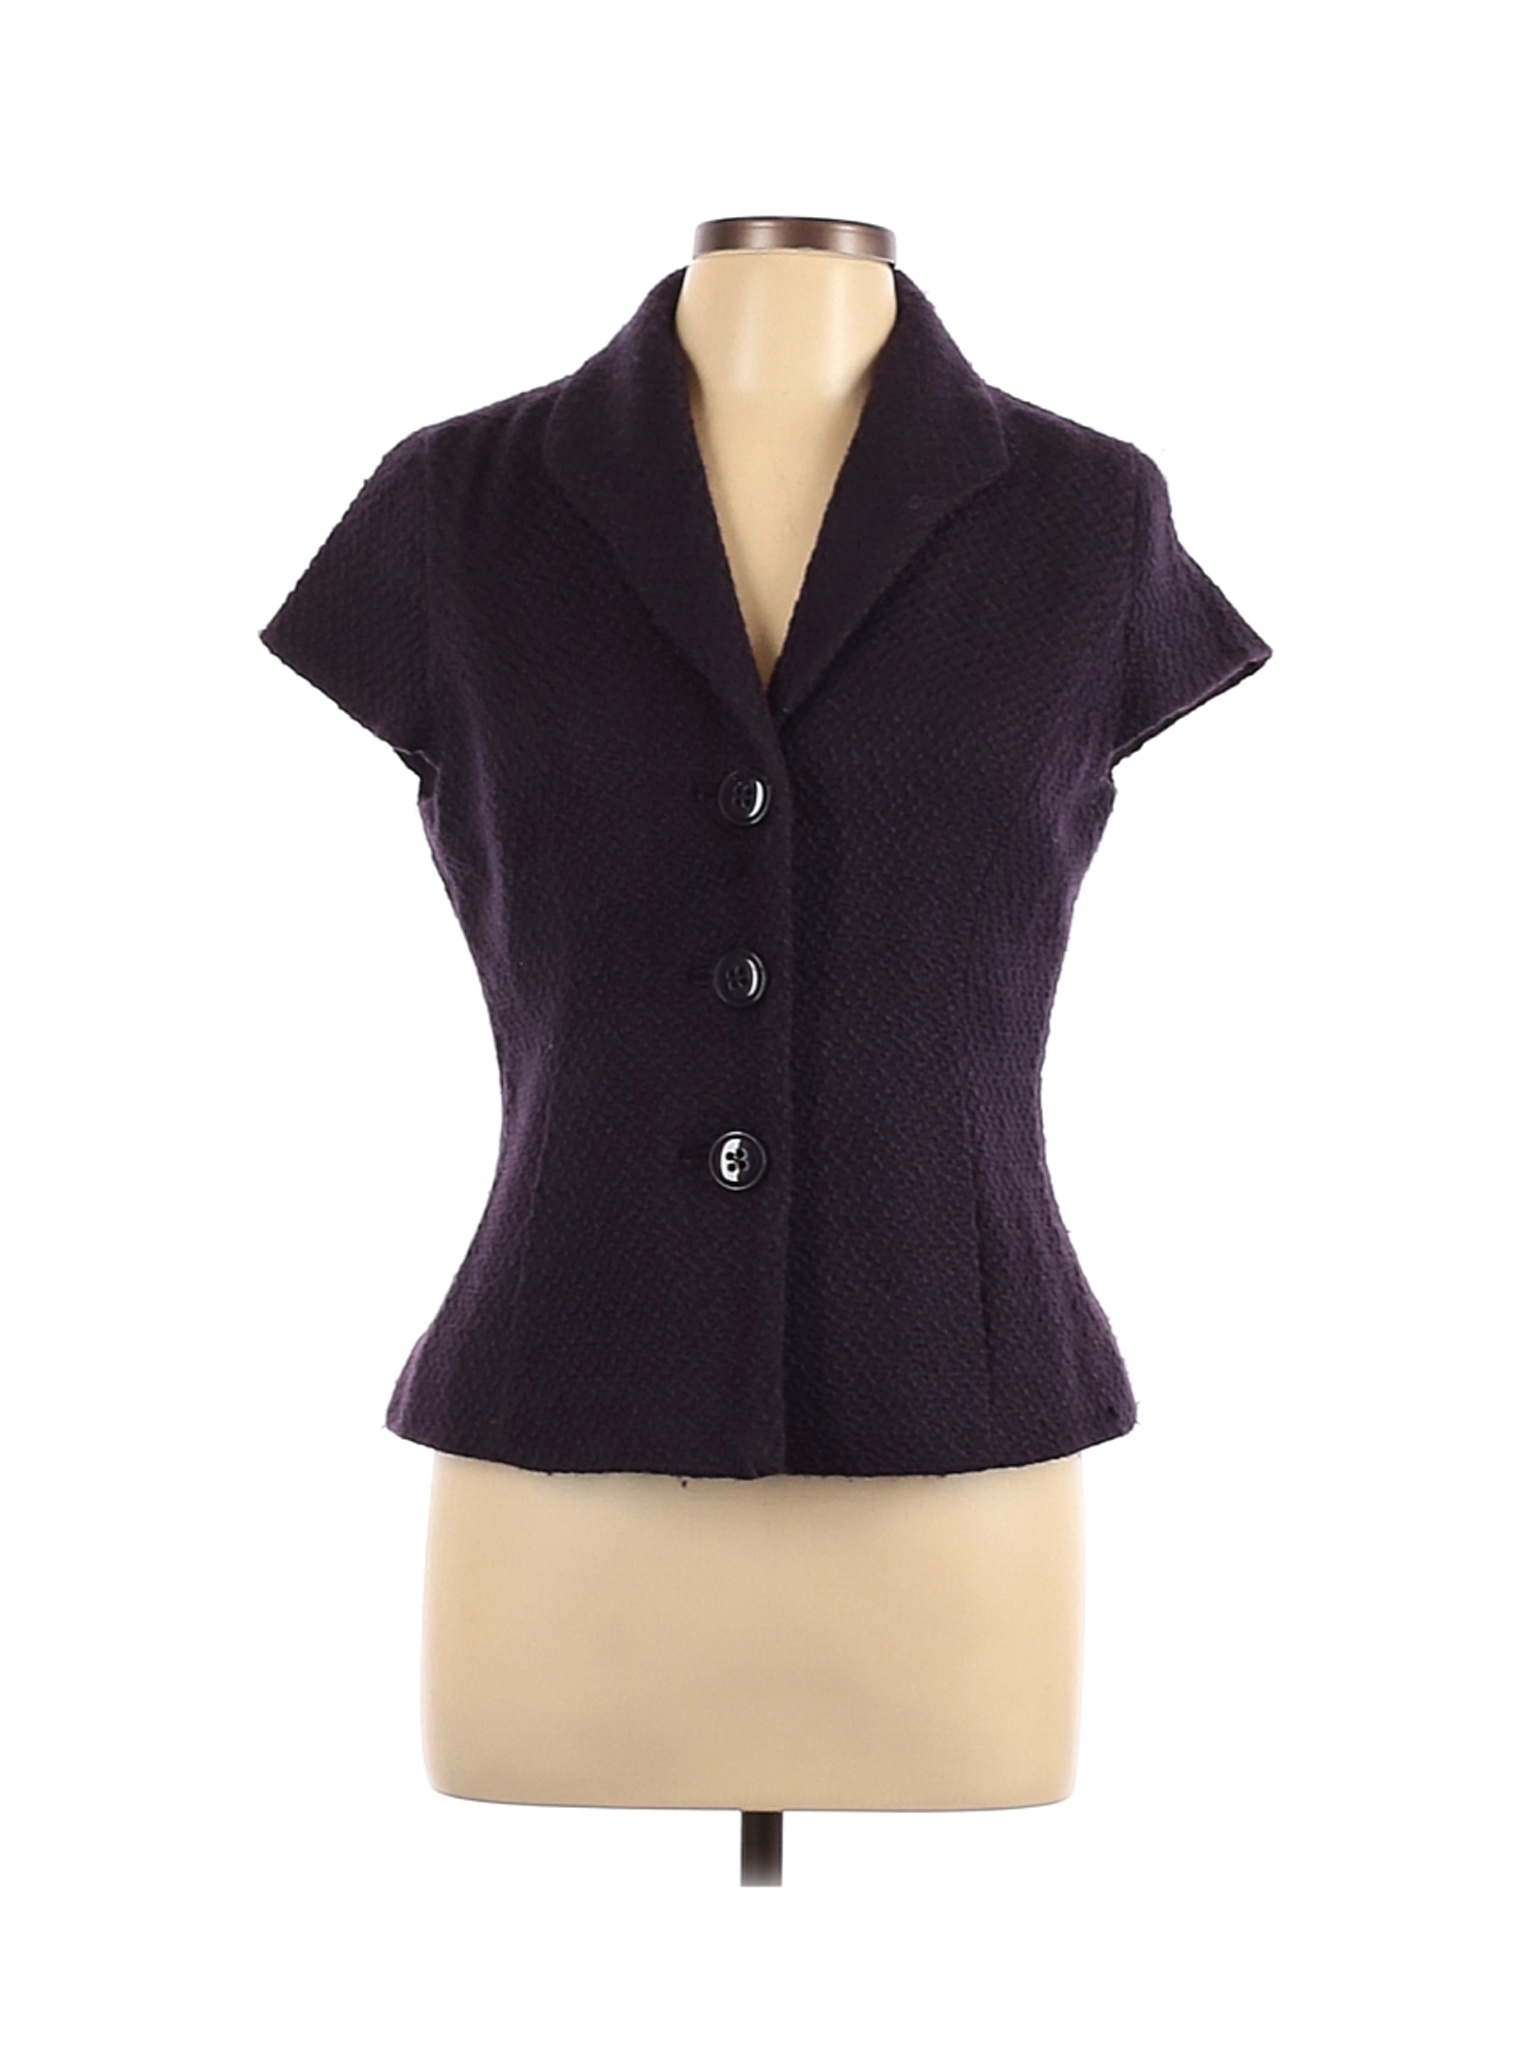 Coldwater Creek Women Purple Blazer 10 | eBay